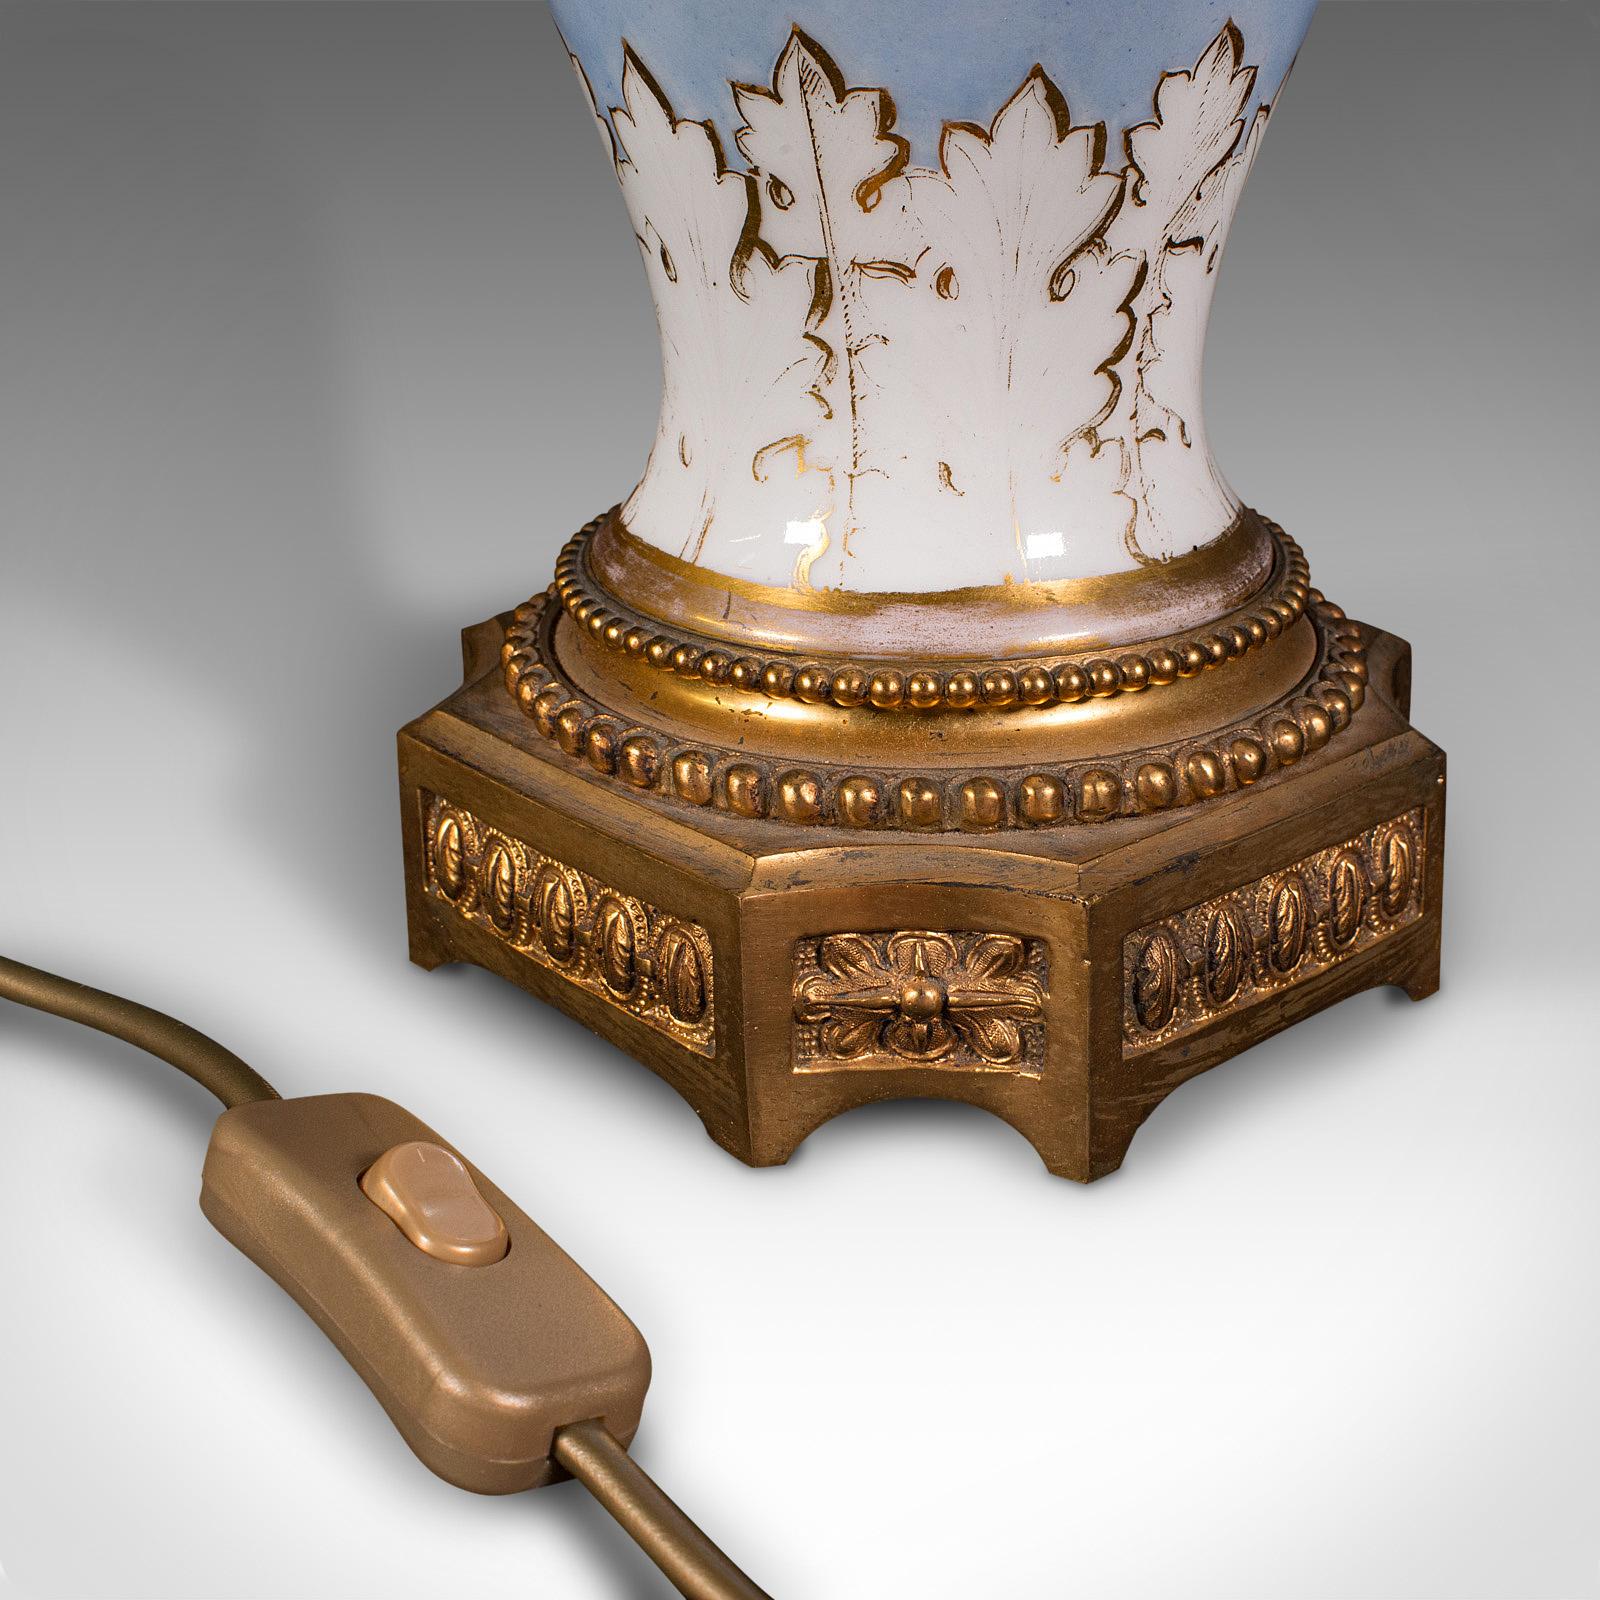 Vintage Cafe Lamp, French, Ceramic, Gilt Metal, Decorative Table Light, C.1930 For Sale 5